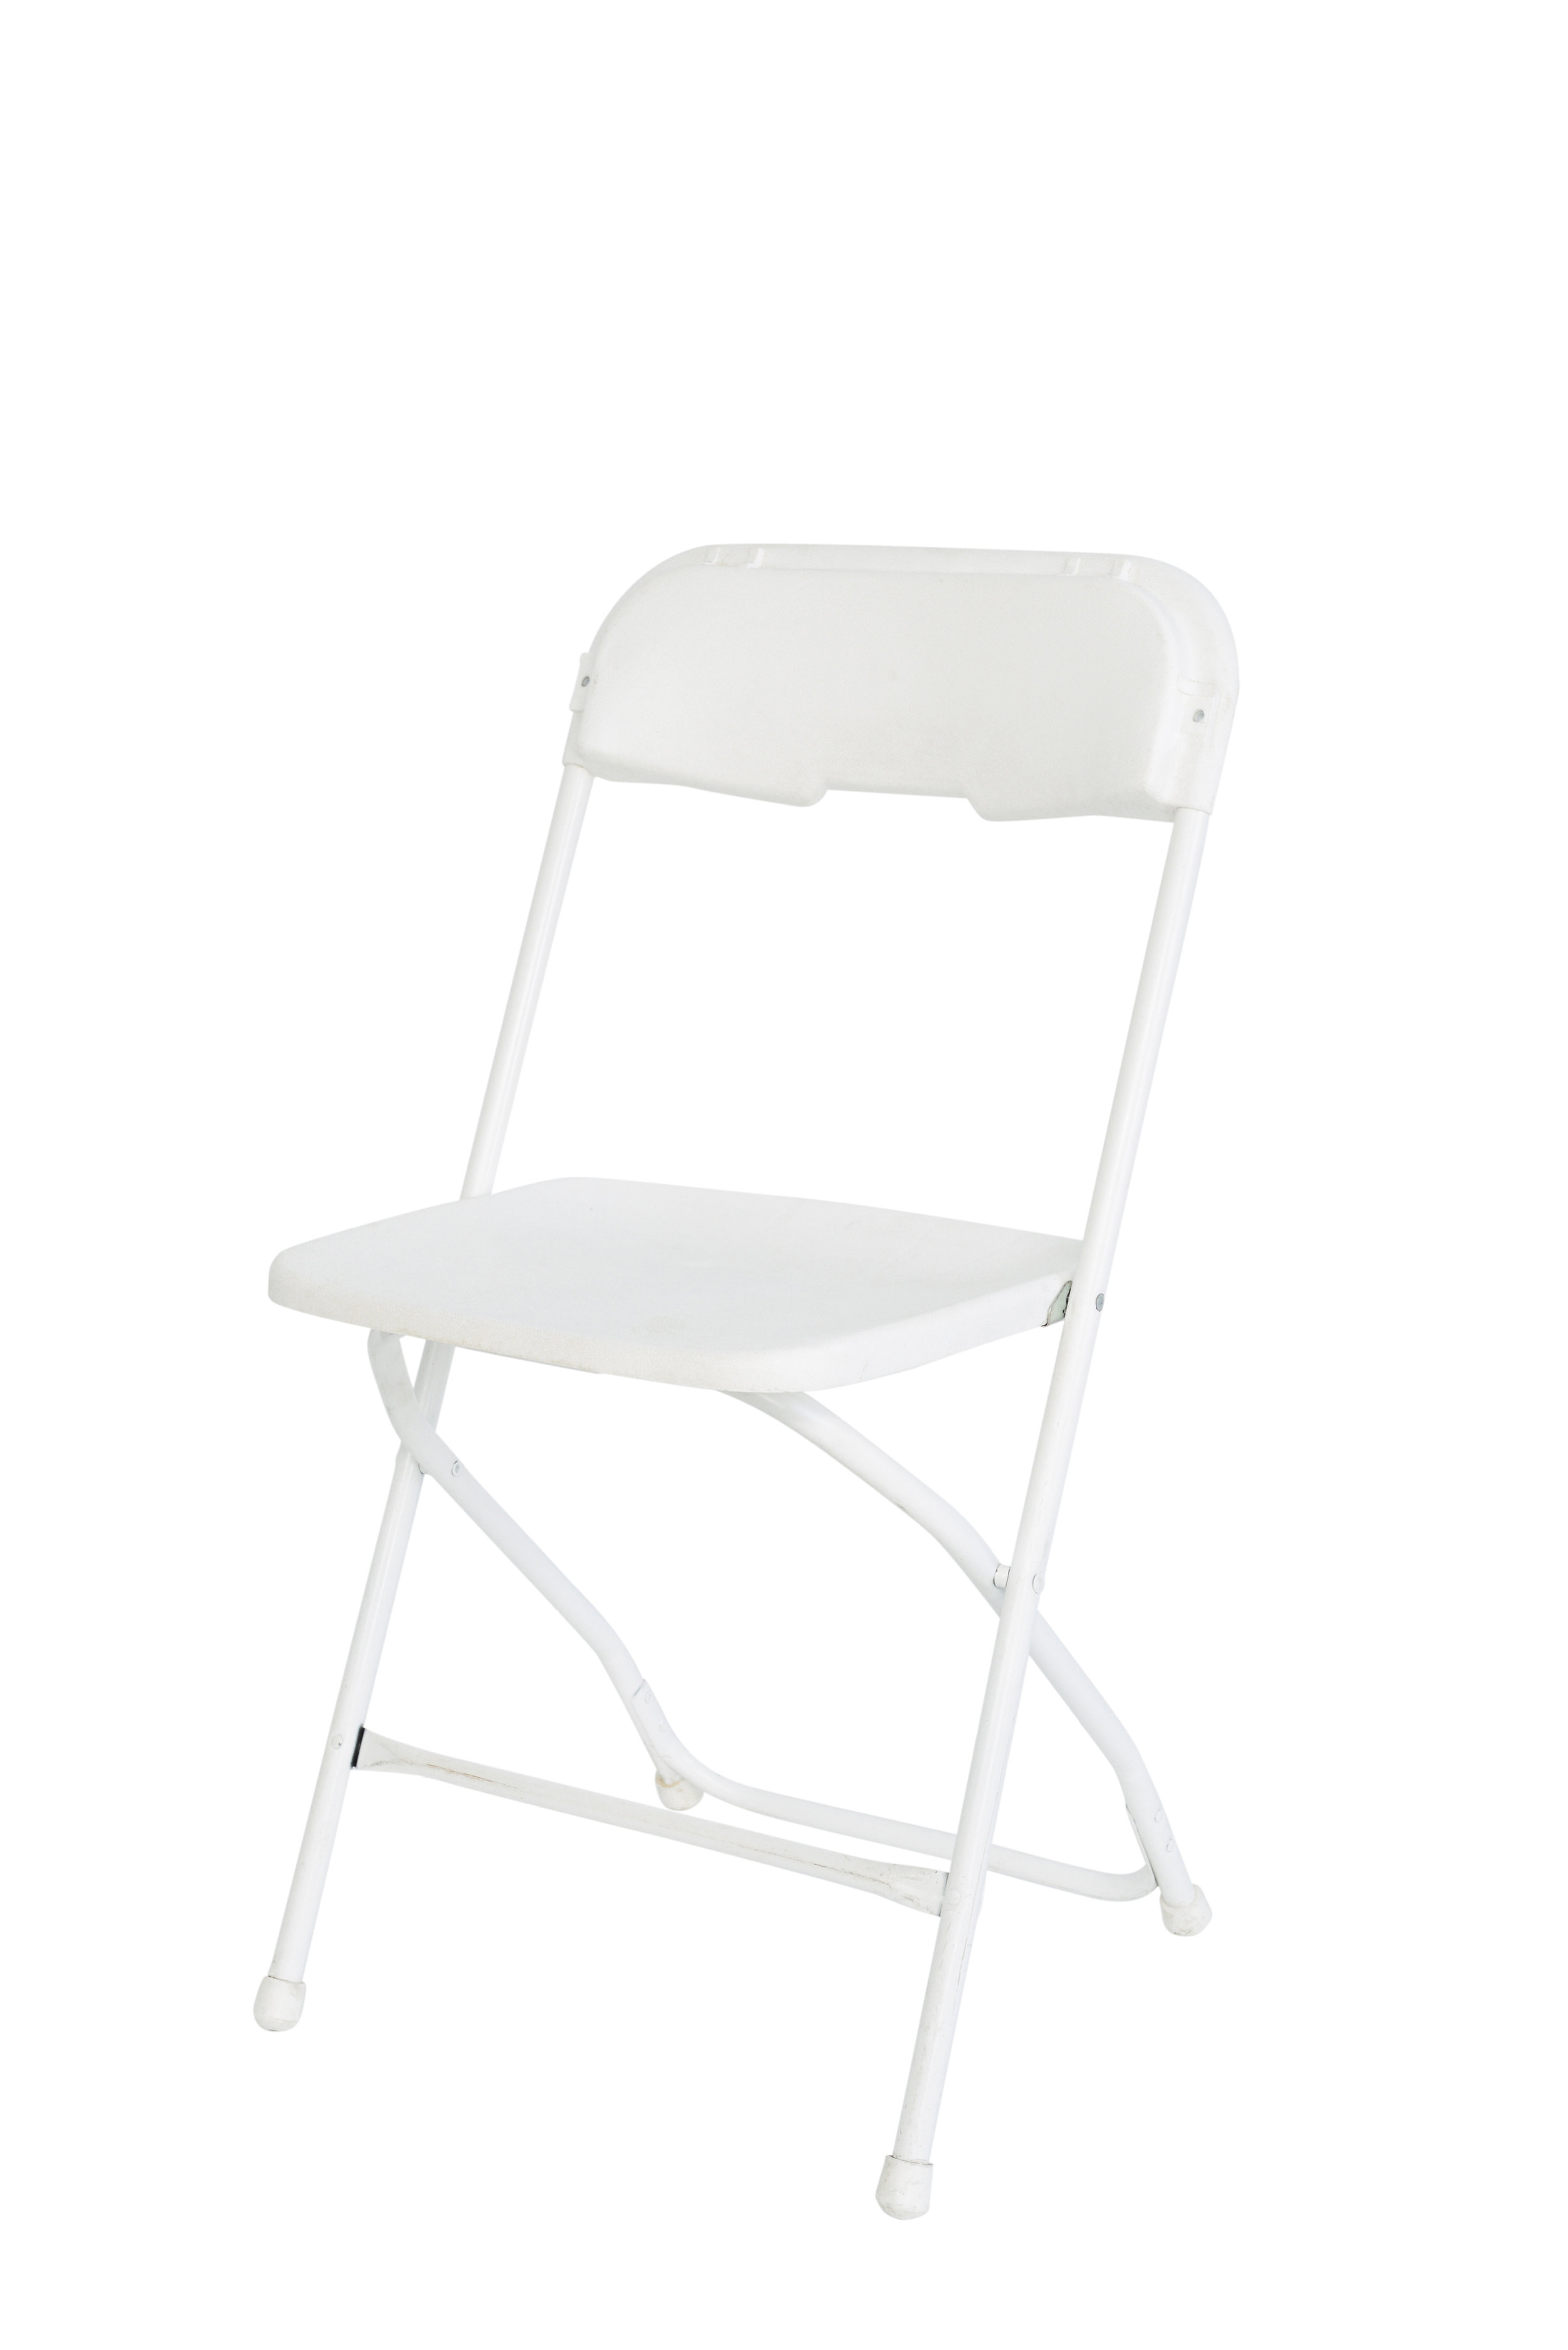 White folding chairs qty. 45